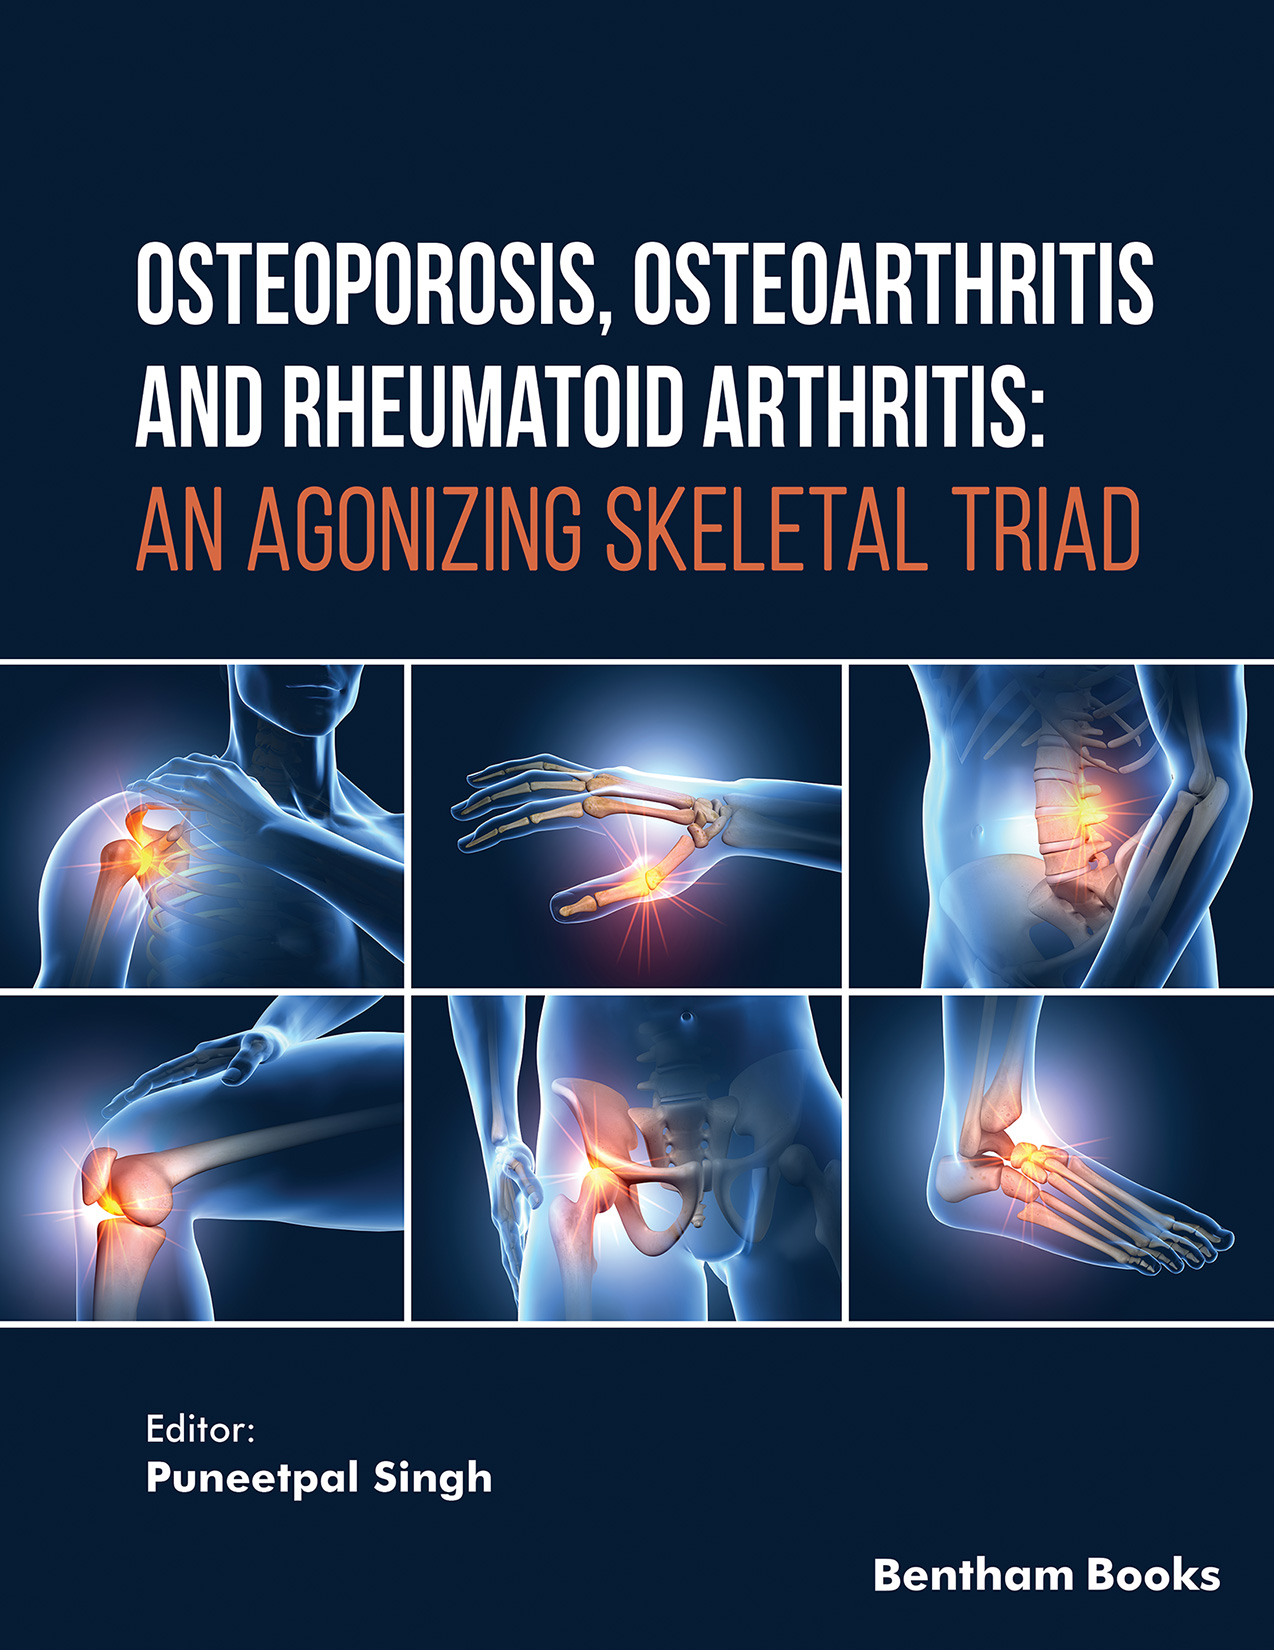 Osteoporosis, Osteoarthritis and Rheumatoid Arthritis: An Agonizing Skeletal Triad